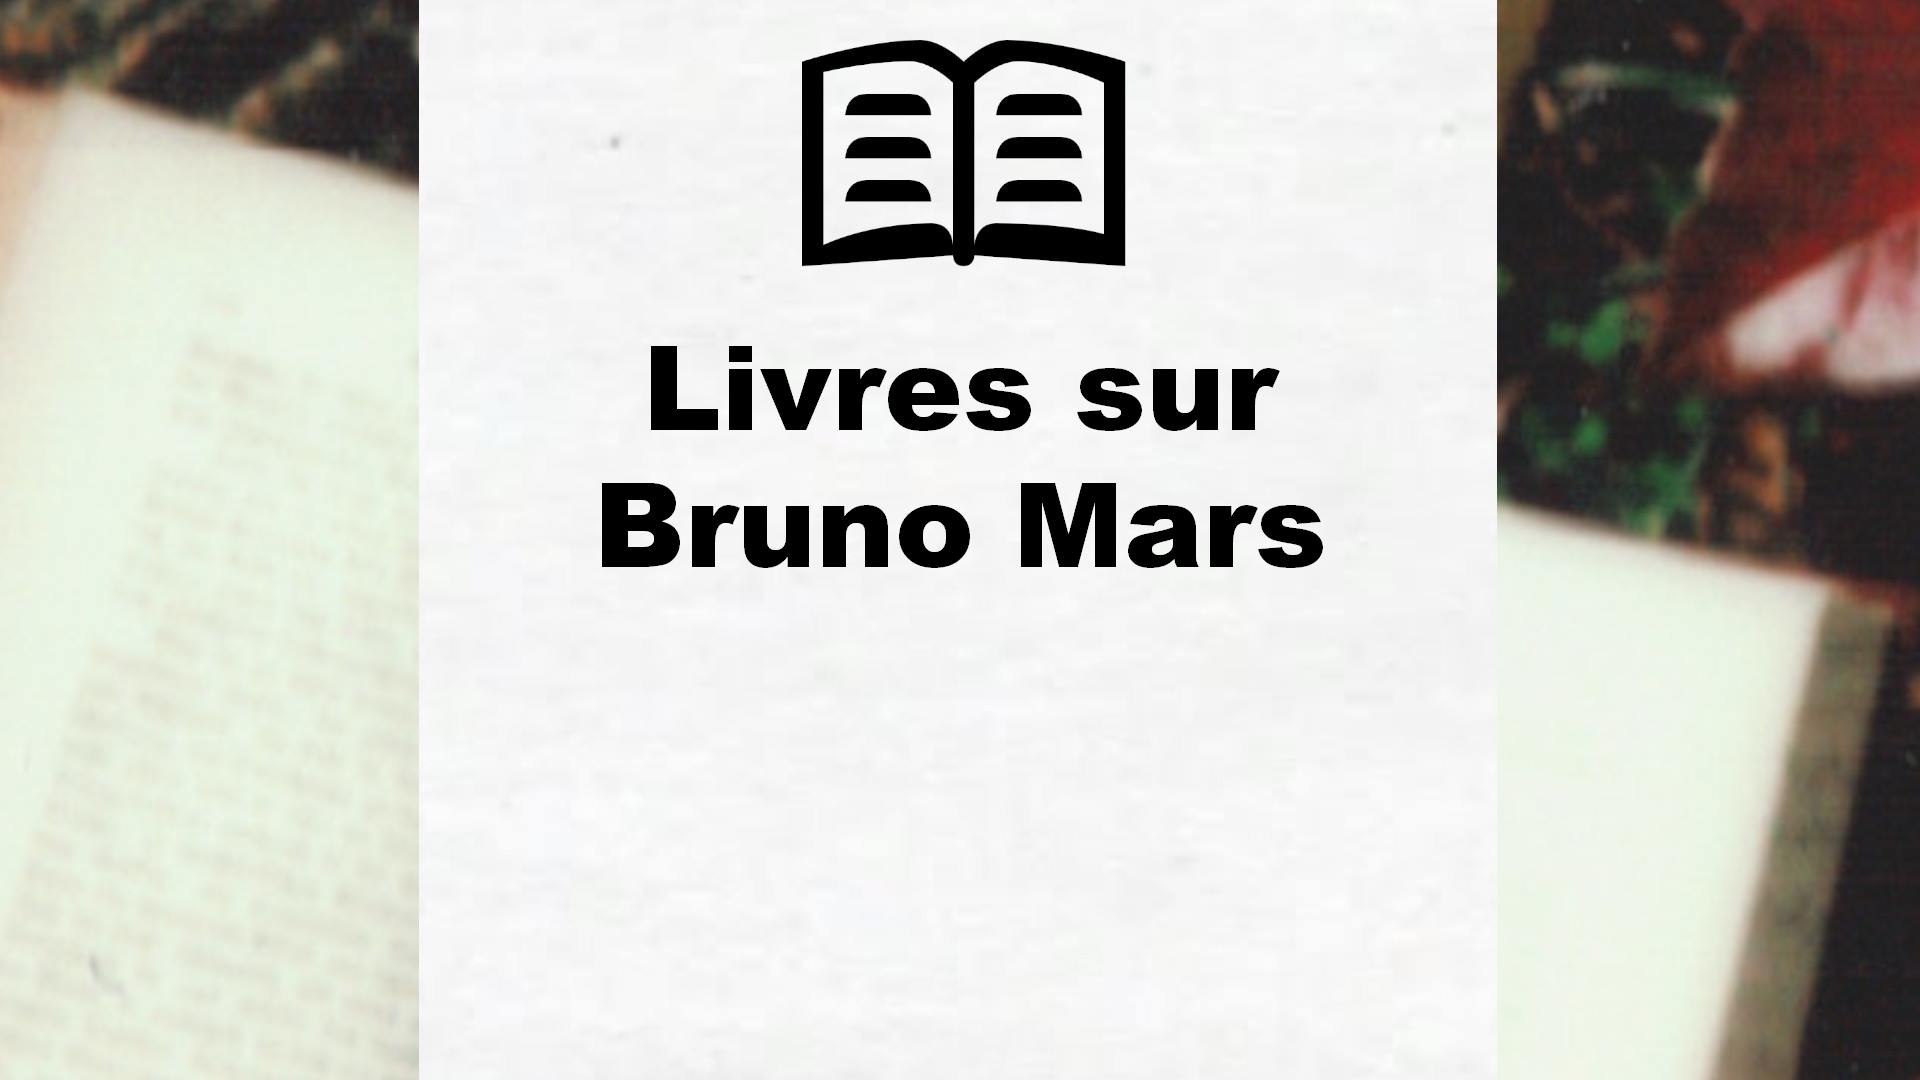 Livres sur Bruno Mars